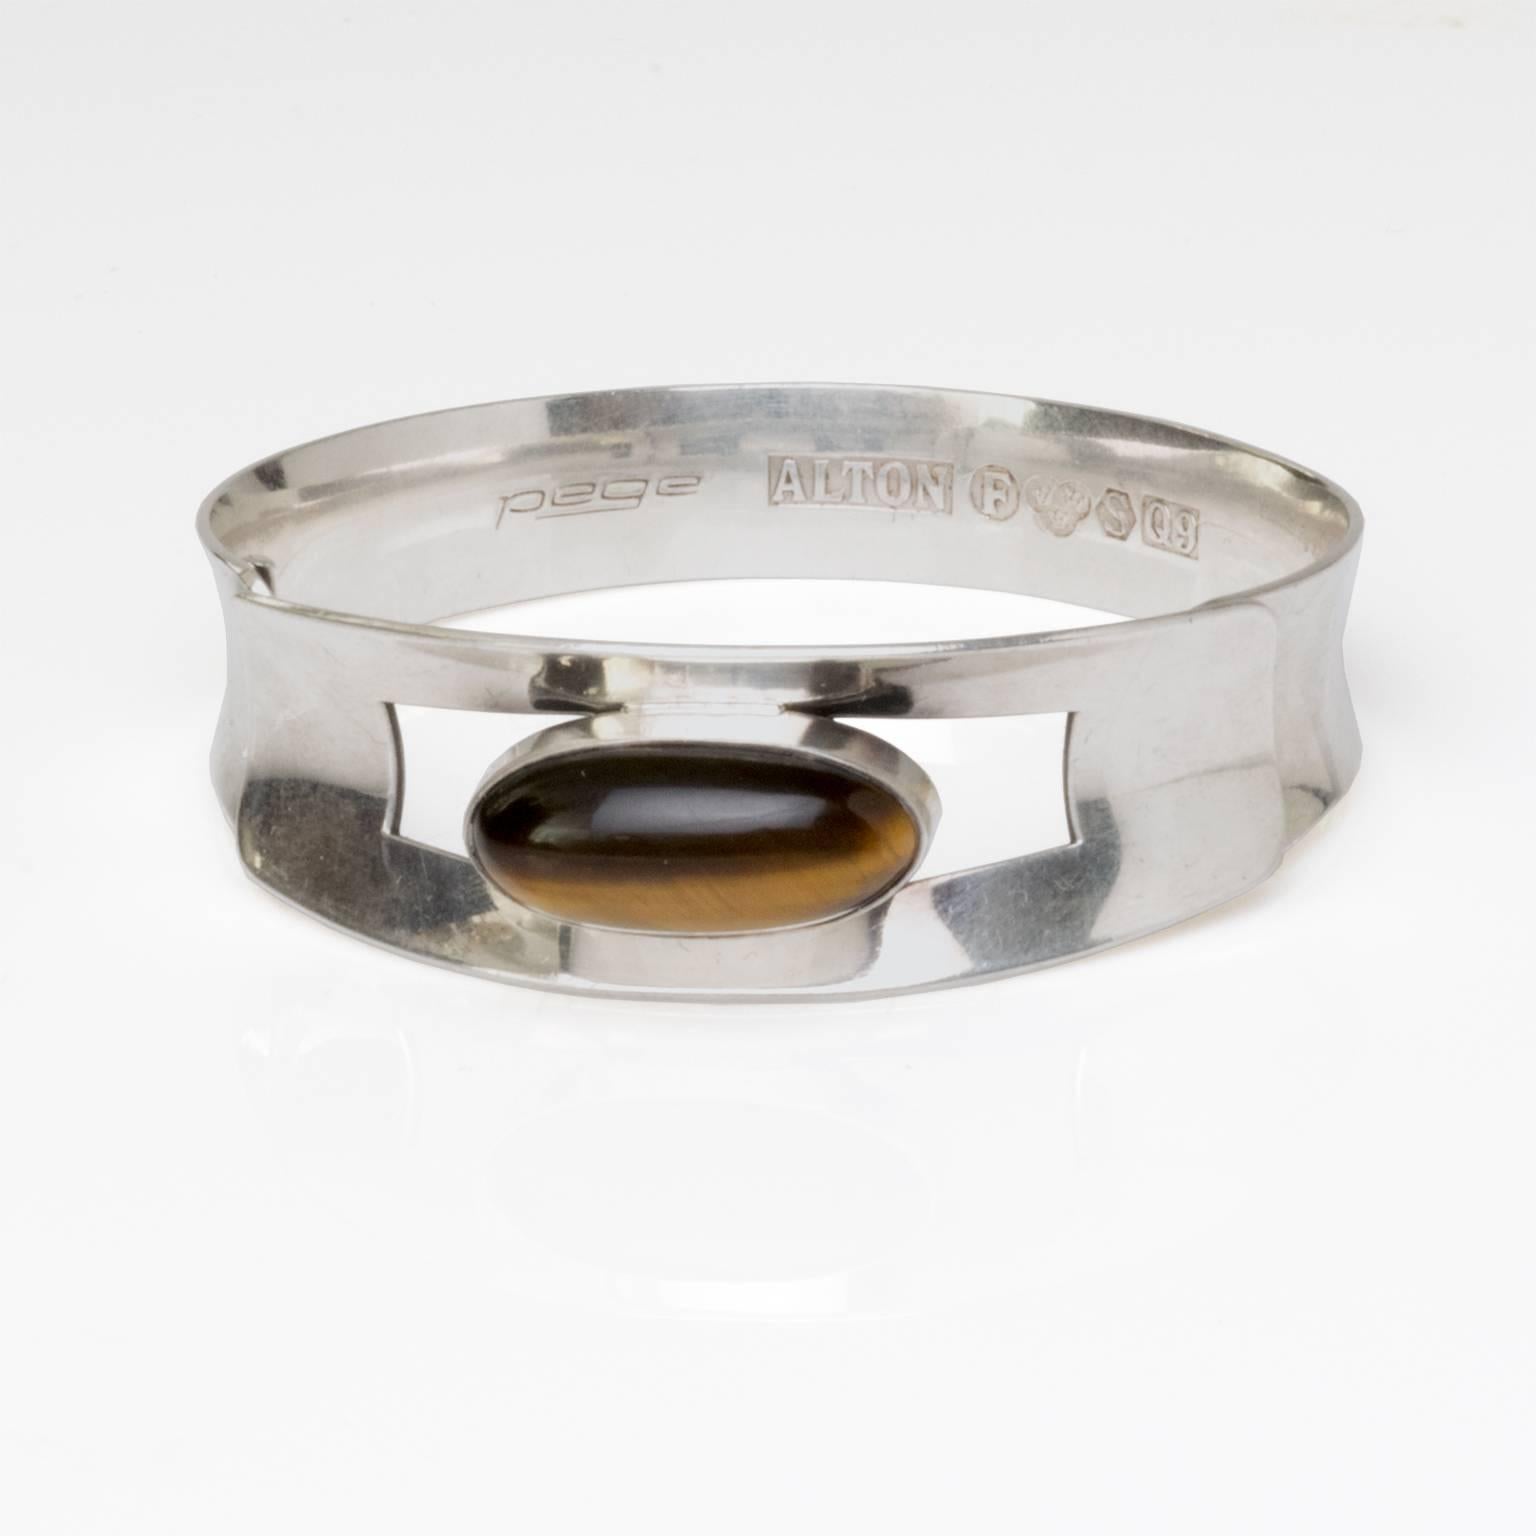 Scandinavian modern silver bracelet with oval tigers eye stone. Signed Pege, made by Alton, Sweden, 1966.
Measures Diameter 2.5